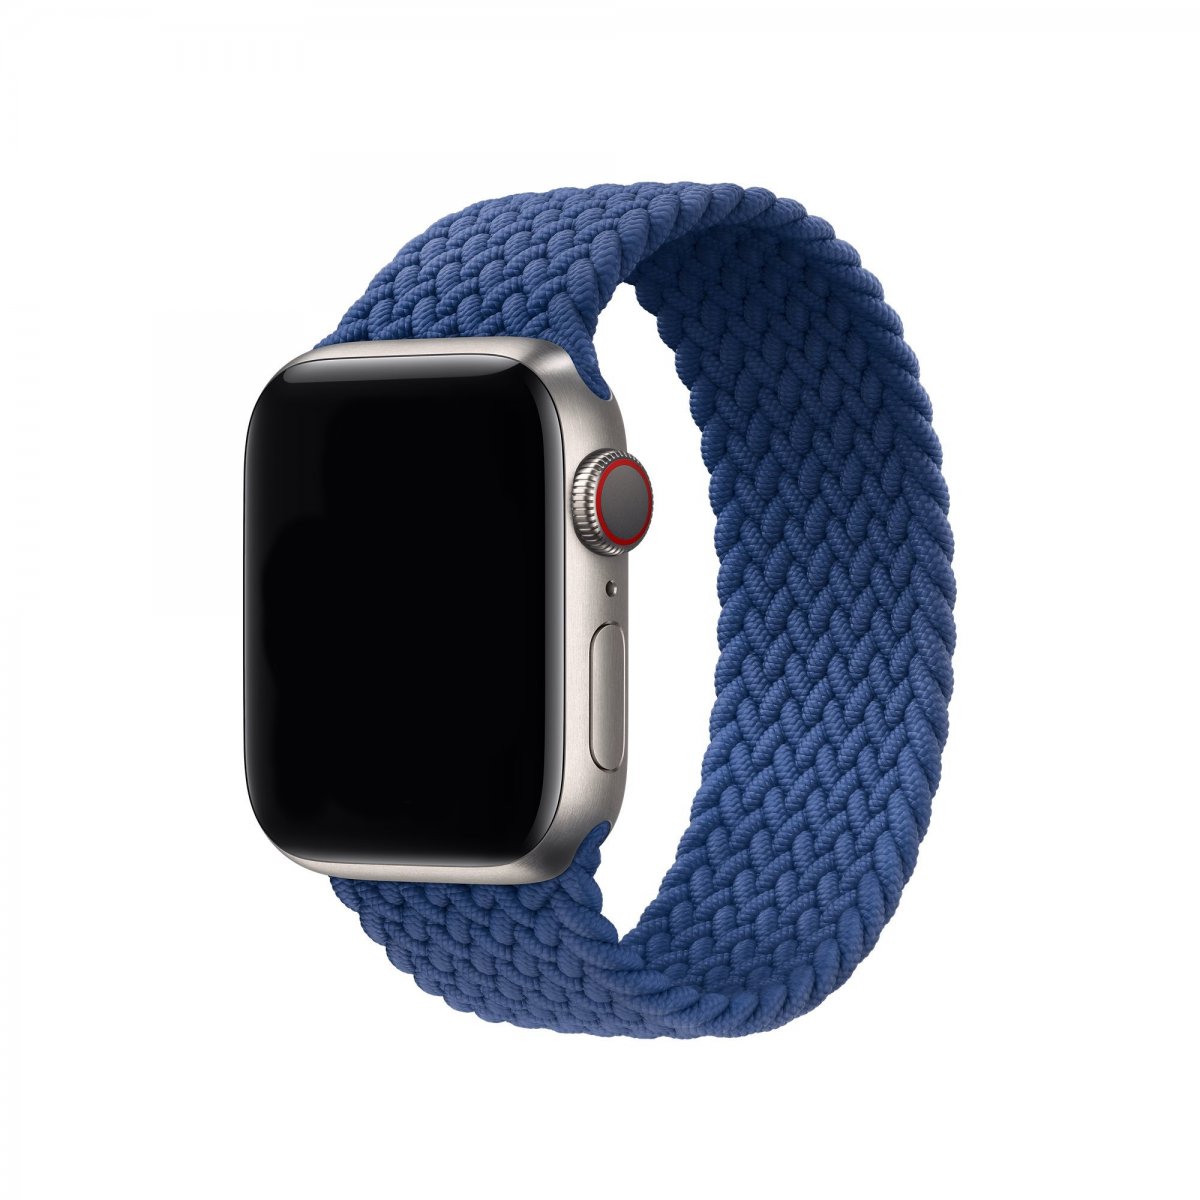 Řemínek iMore Braided Solo Loop Apple Watch Series 1/2/3 42mm - atlanticky modrý (L)